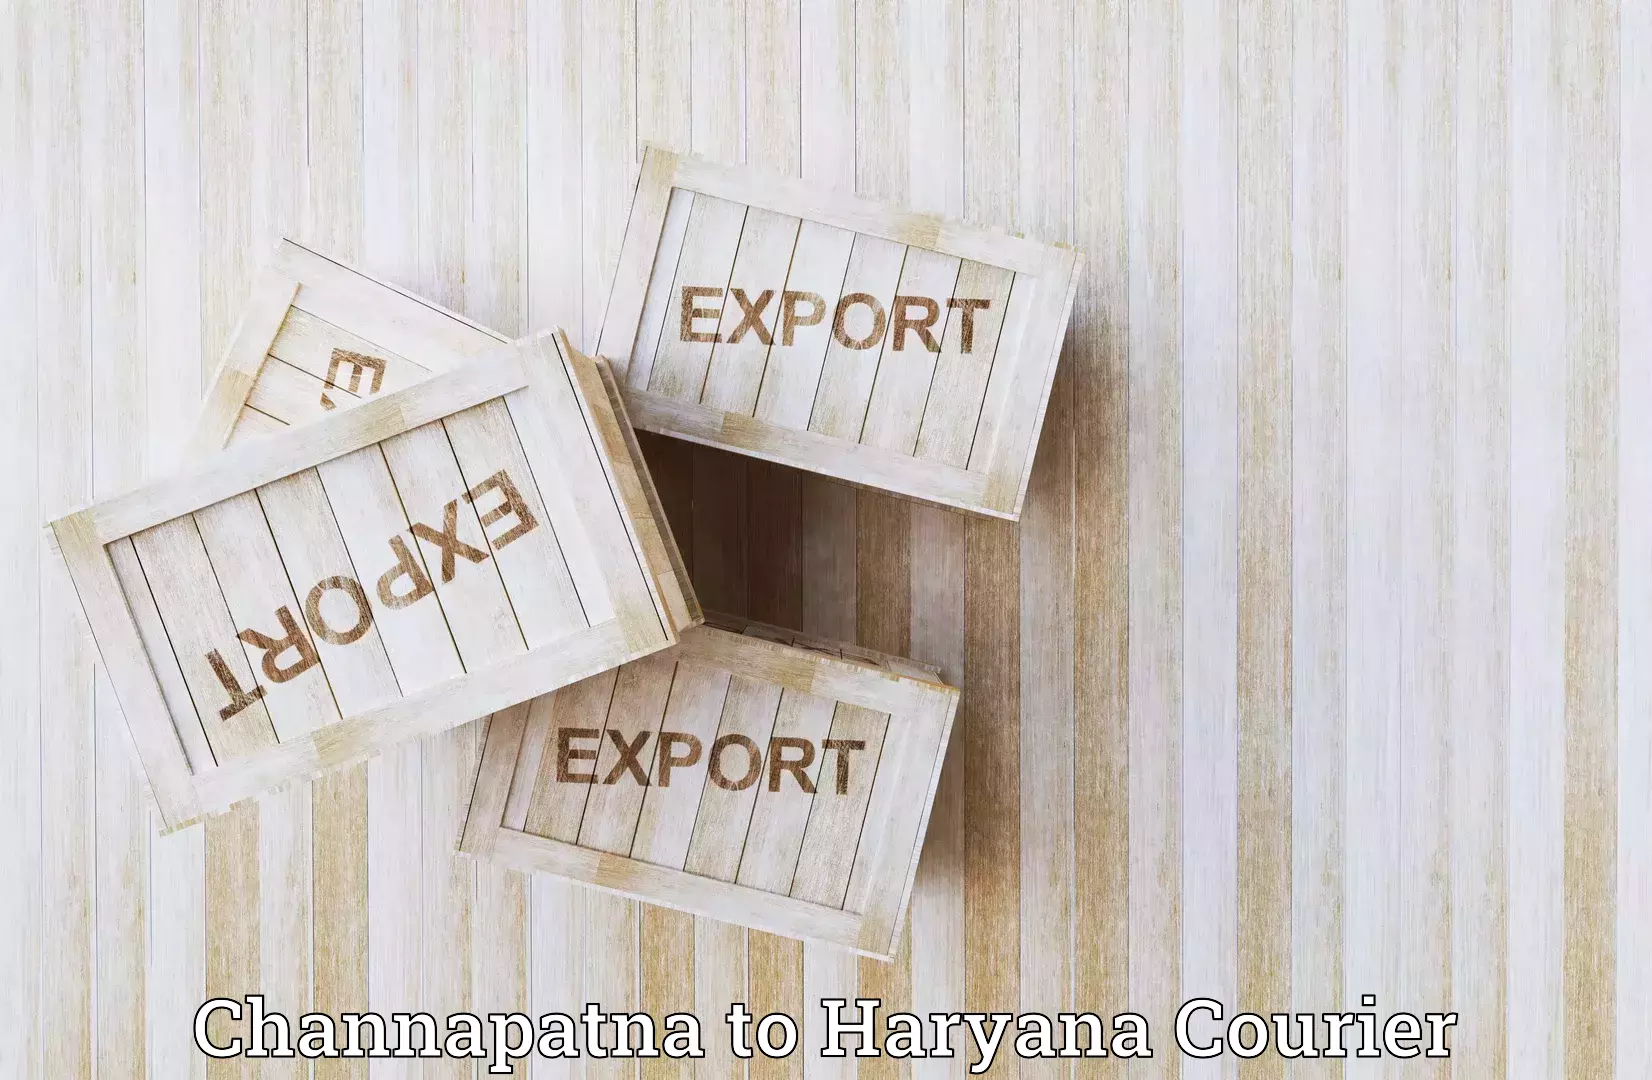 Global shipping networks Channapatna to Haryana